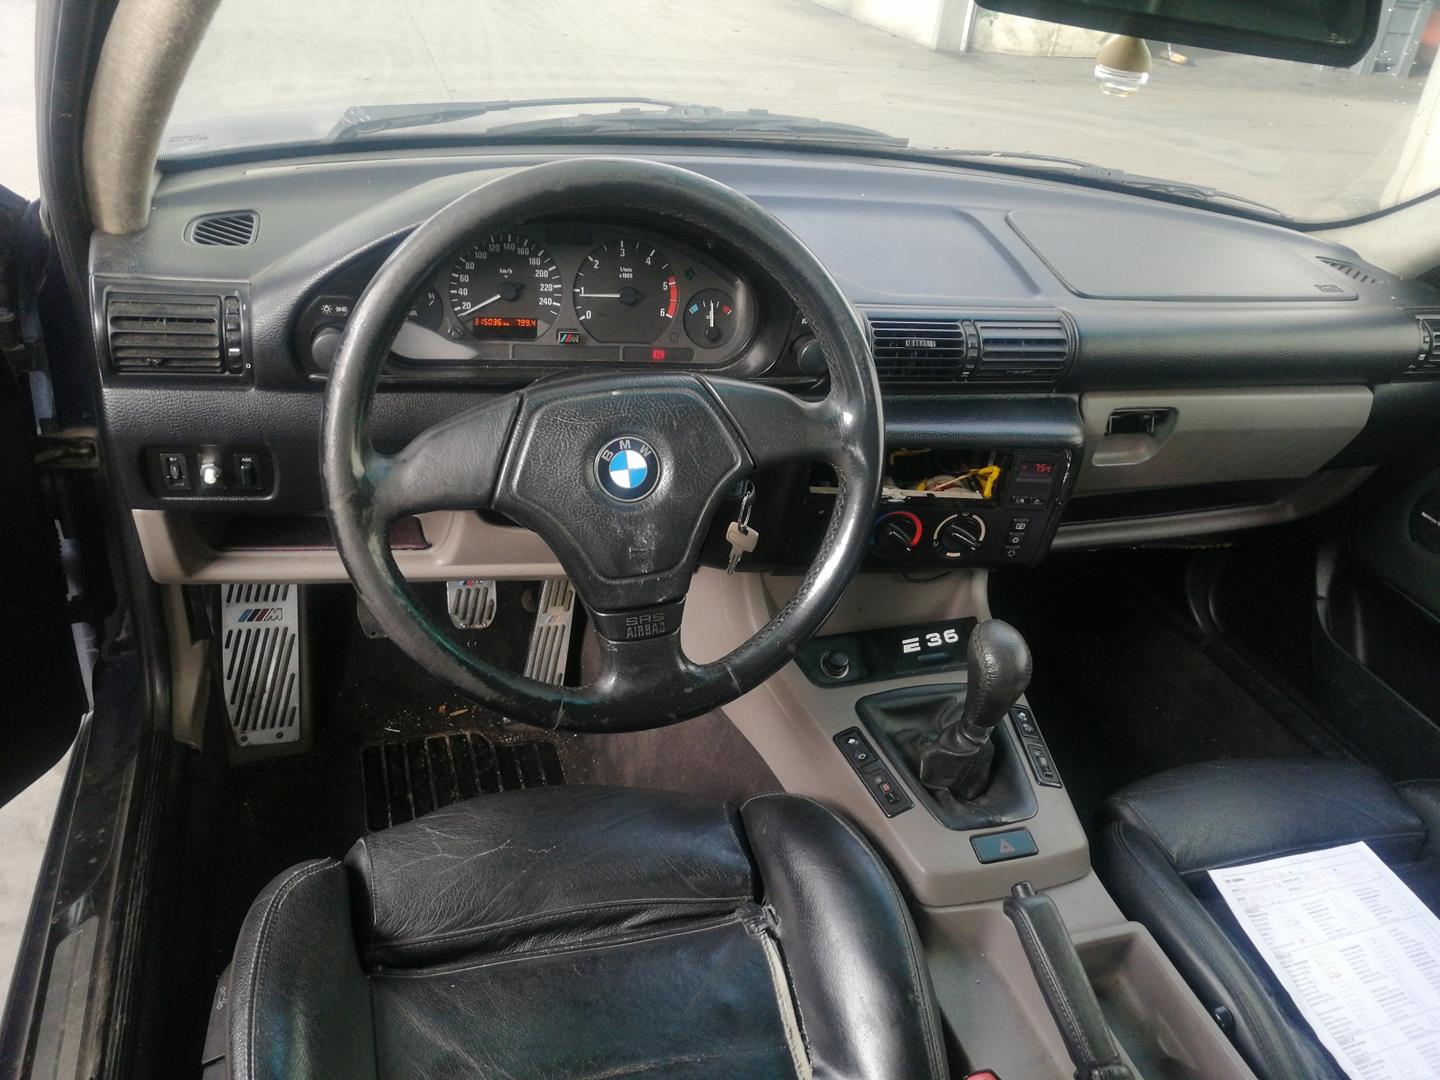 BMW 3 Series E36 (1990-2000) Smagratis 21211223492, 3082895201 24199617